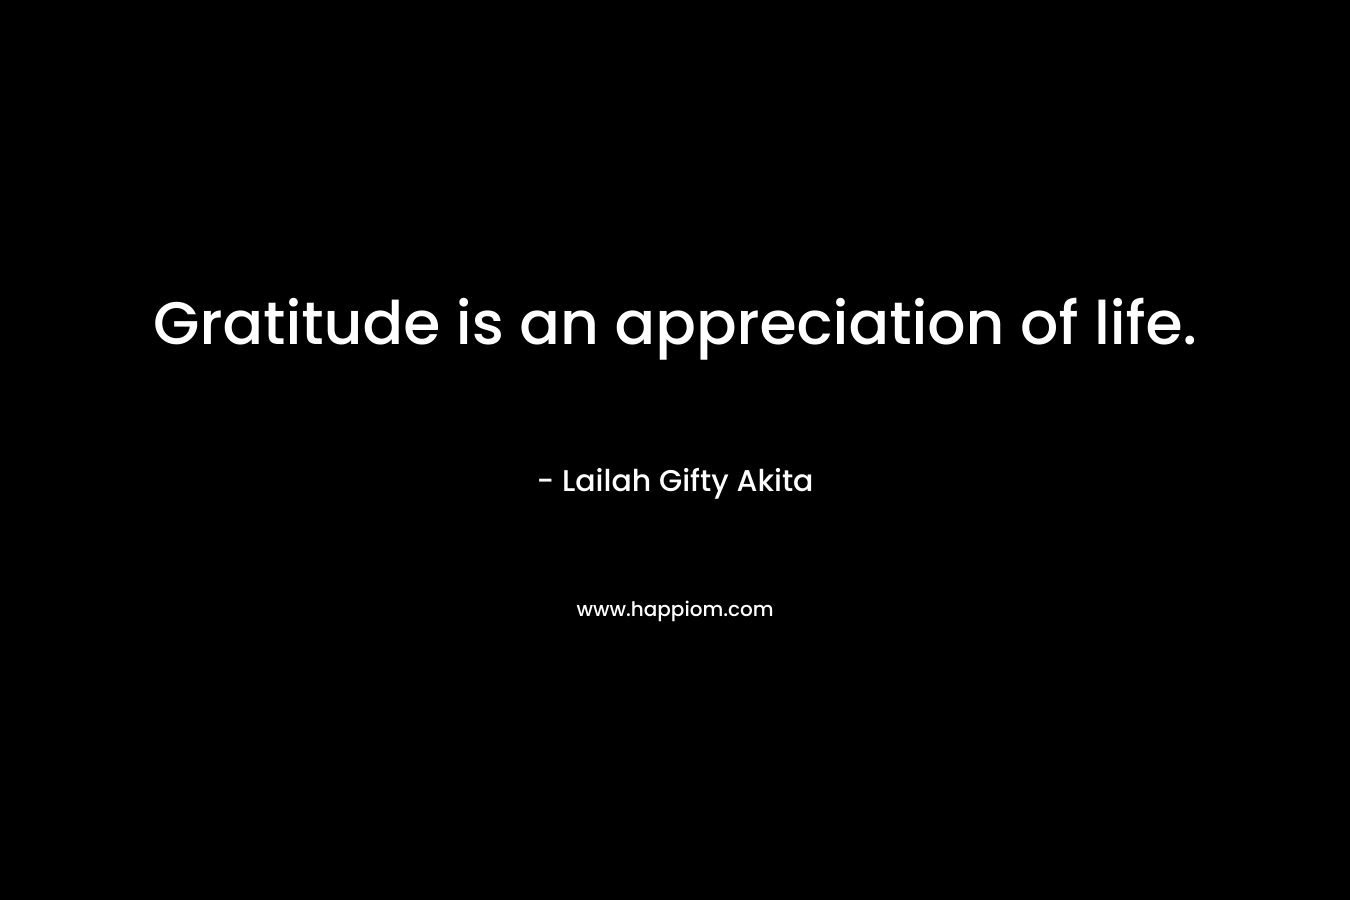 Gratitude is an appreciation of life.